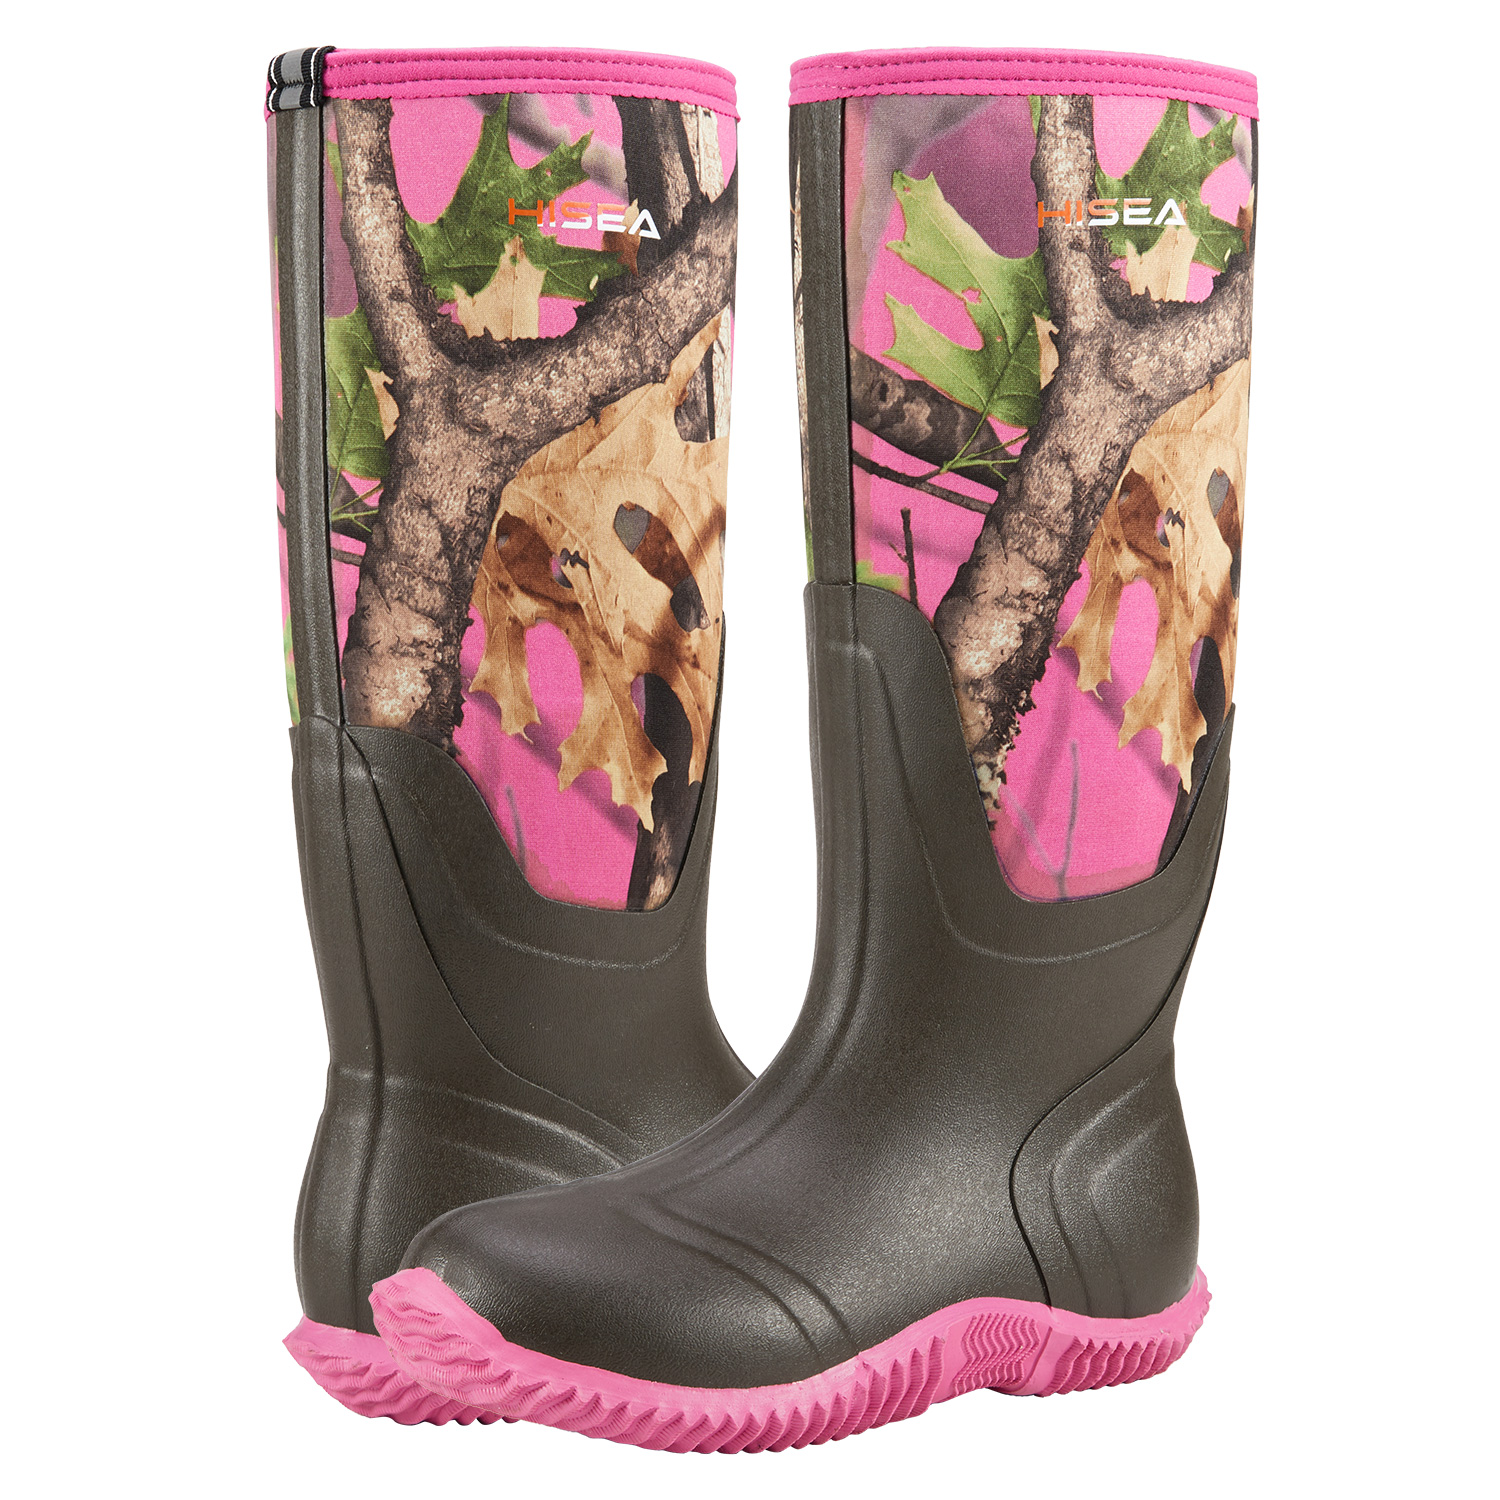 HISEA Women's Rain Boots, Waterproof Insulated Rubber Neoprene Boots ...